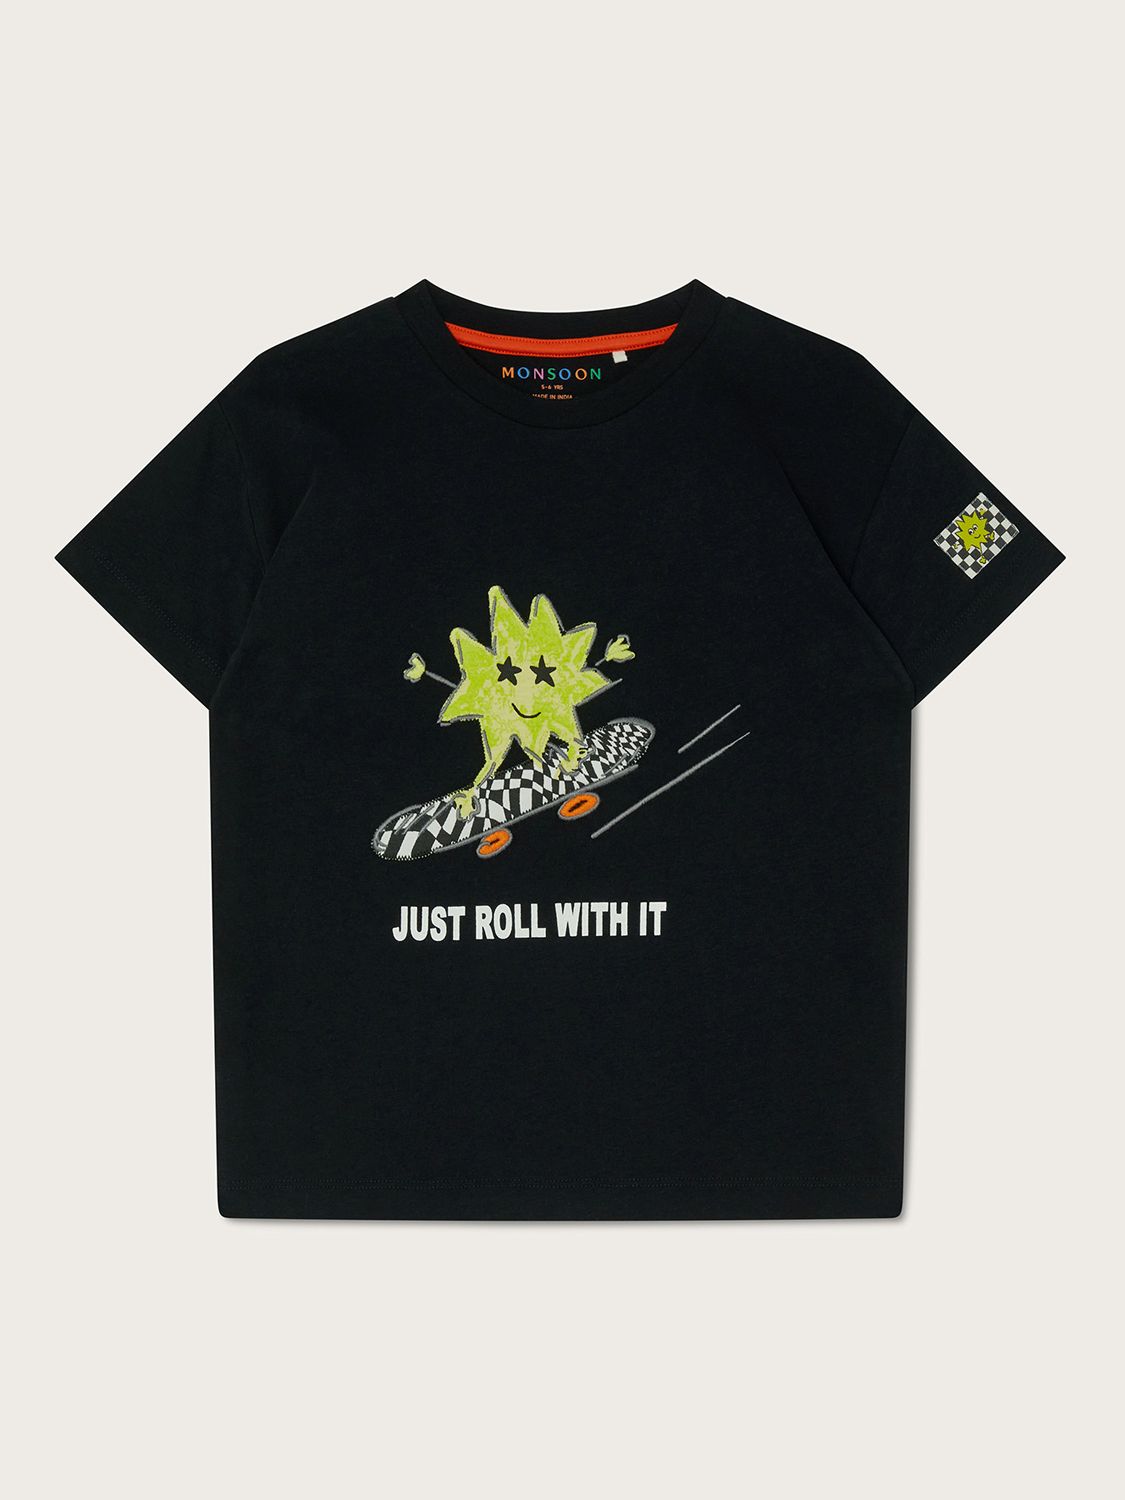 Monsoon Kids' Skating Star T-Shirt, Black/Multi, 3-4 years